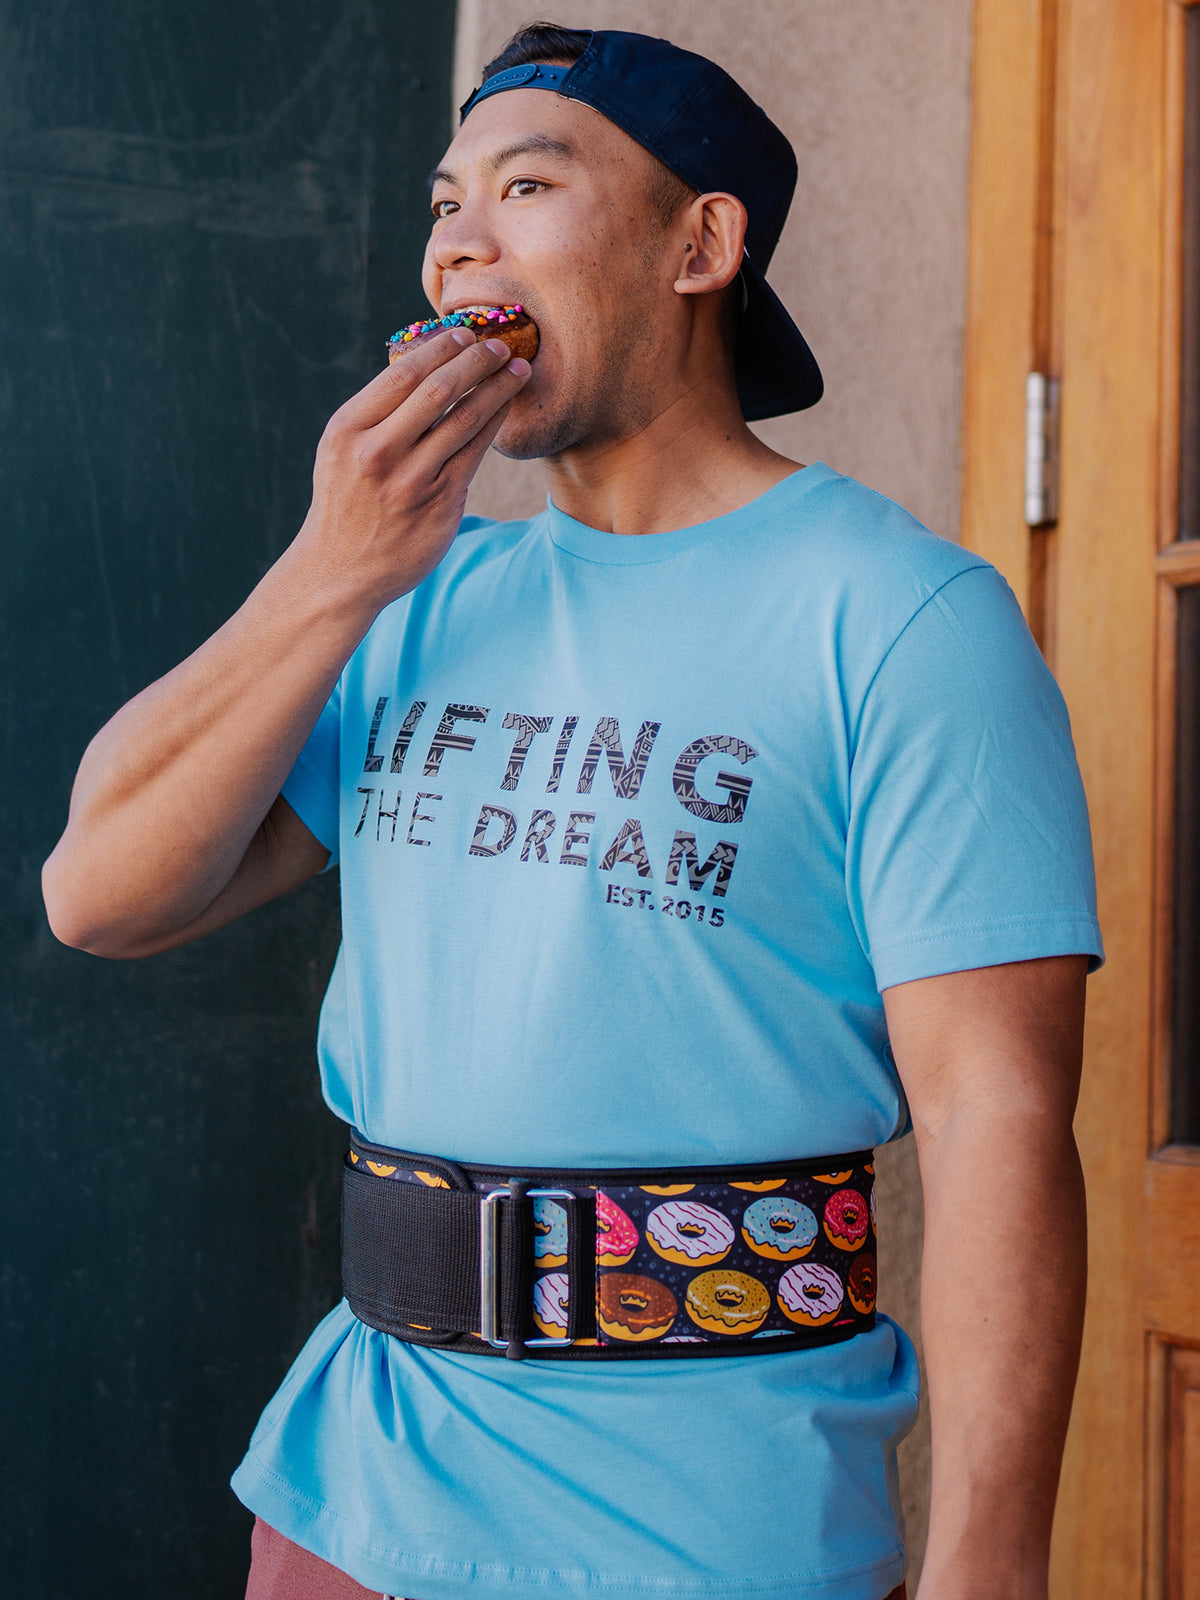 Donut Judge Me Lifting Belt